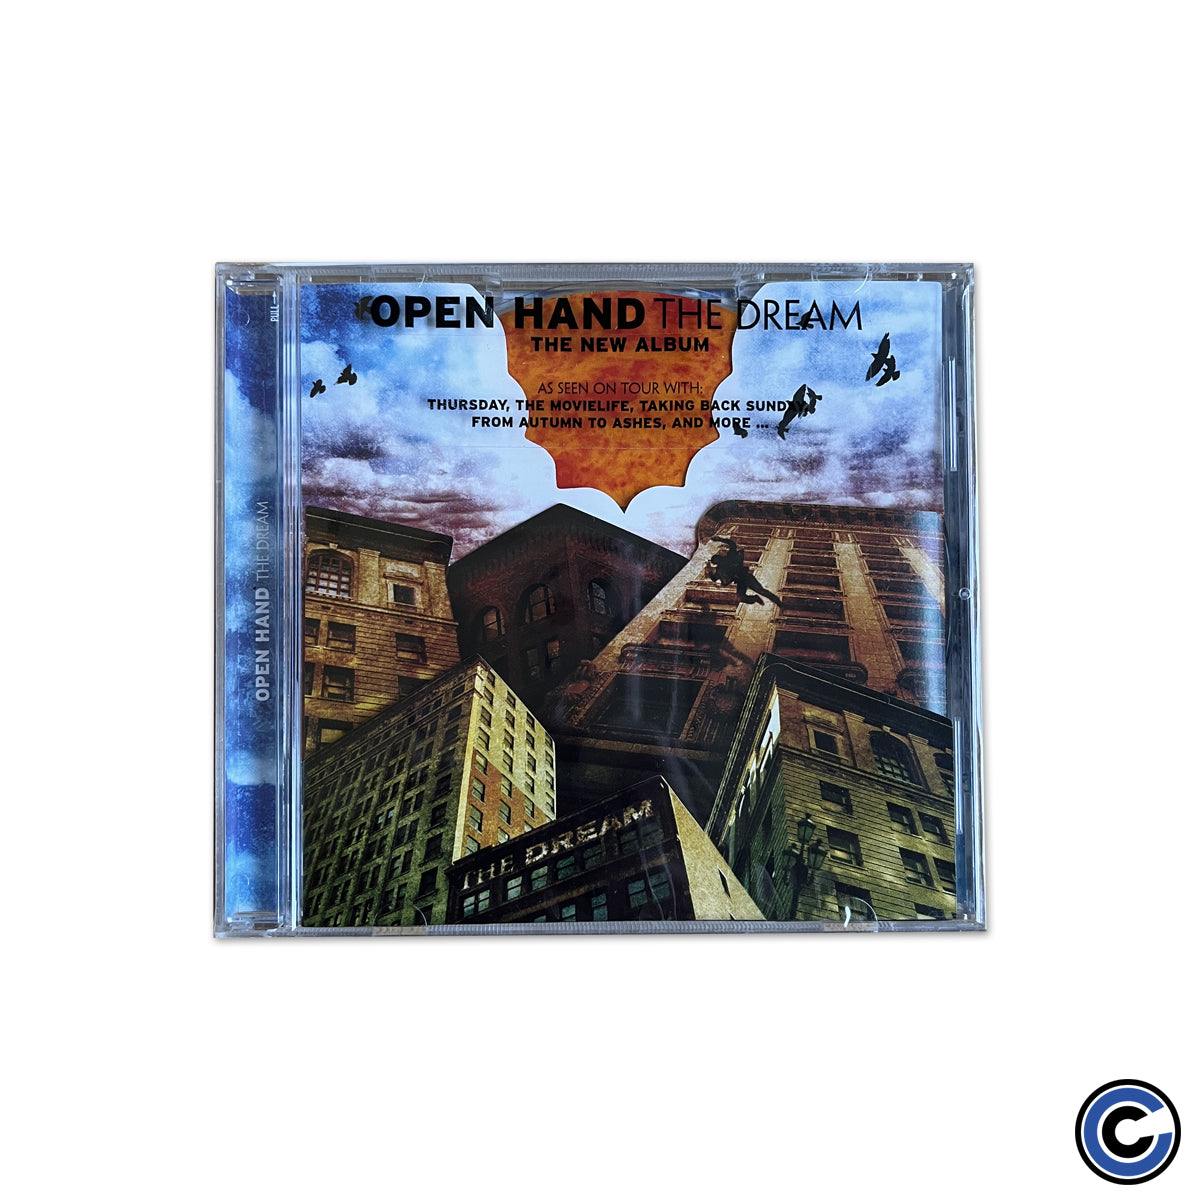 Open Hand "The Dream" CD